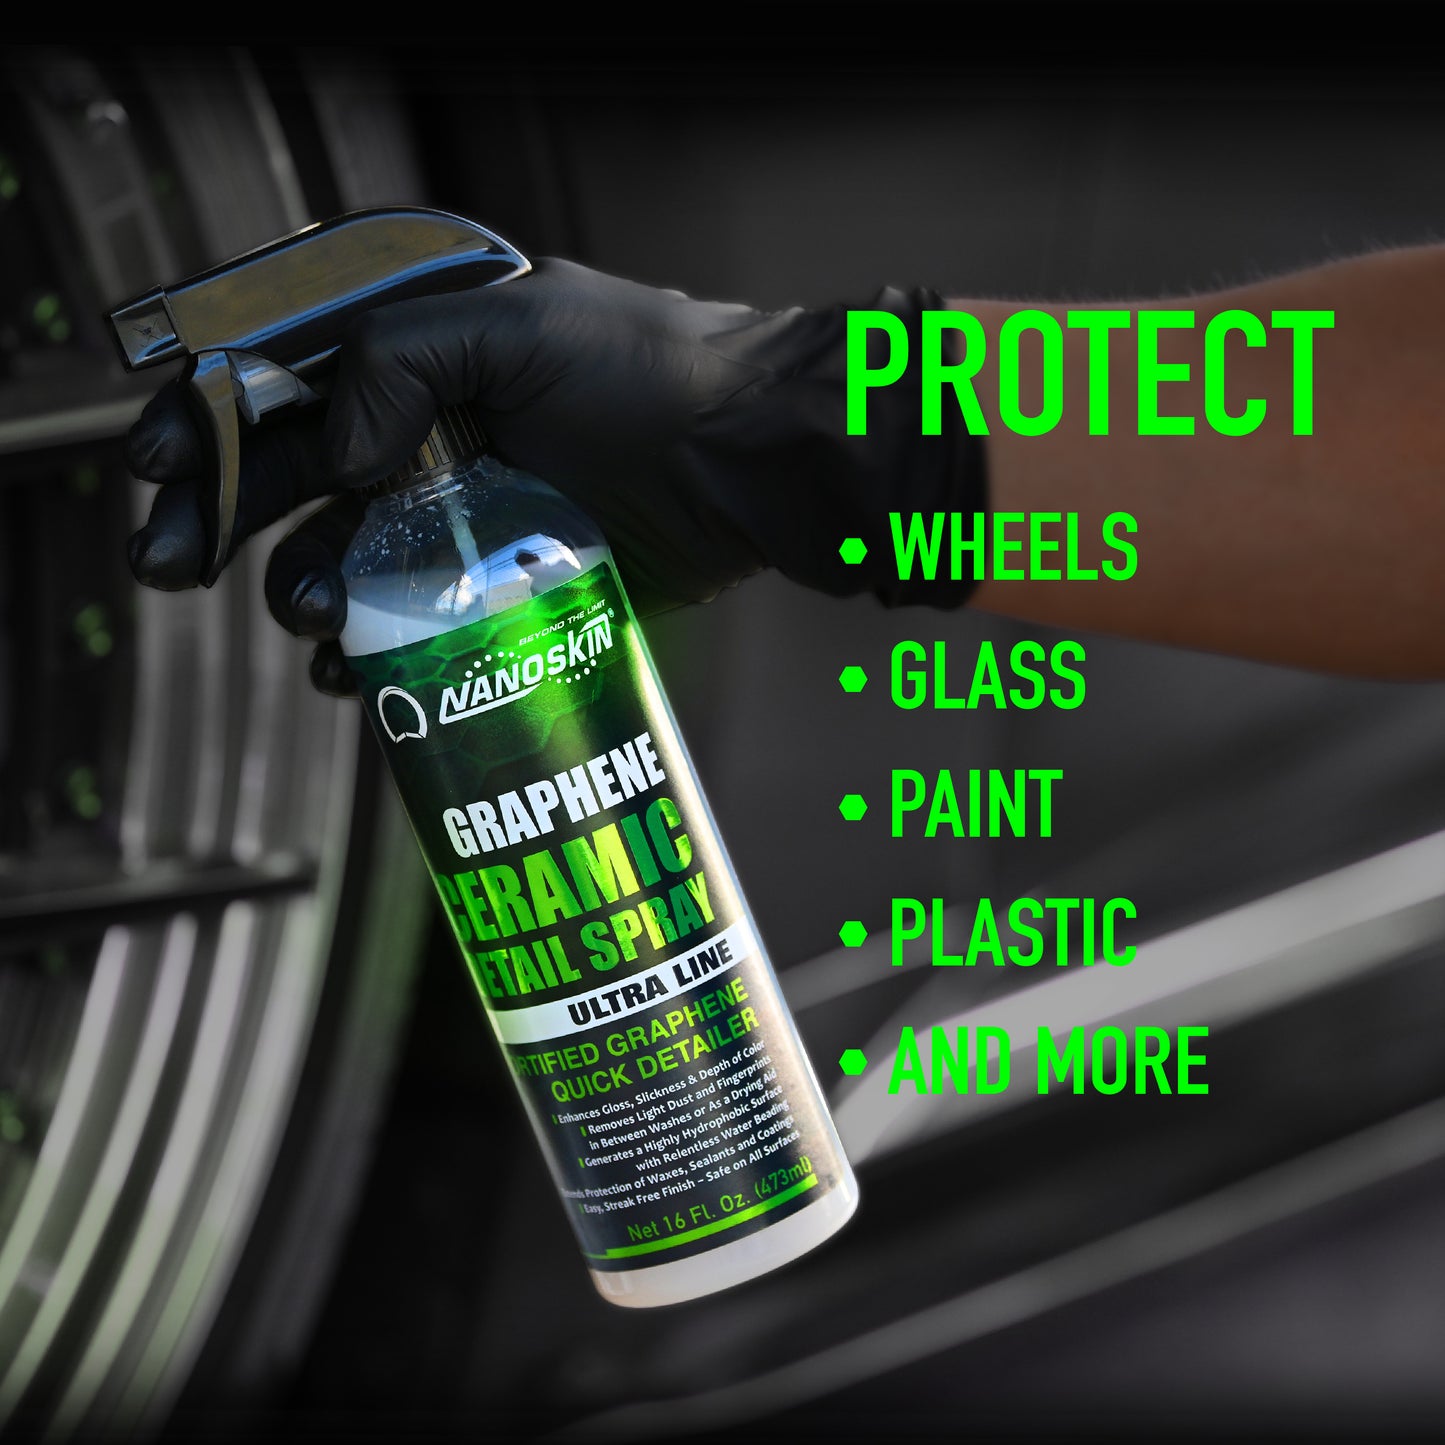 Puris Car Care G66 Graphene Detail Spray - quick detailer z